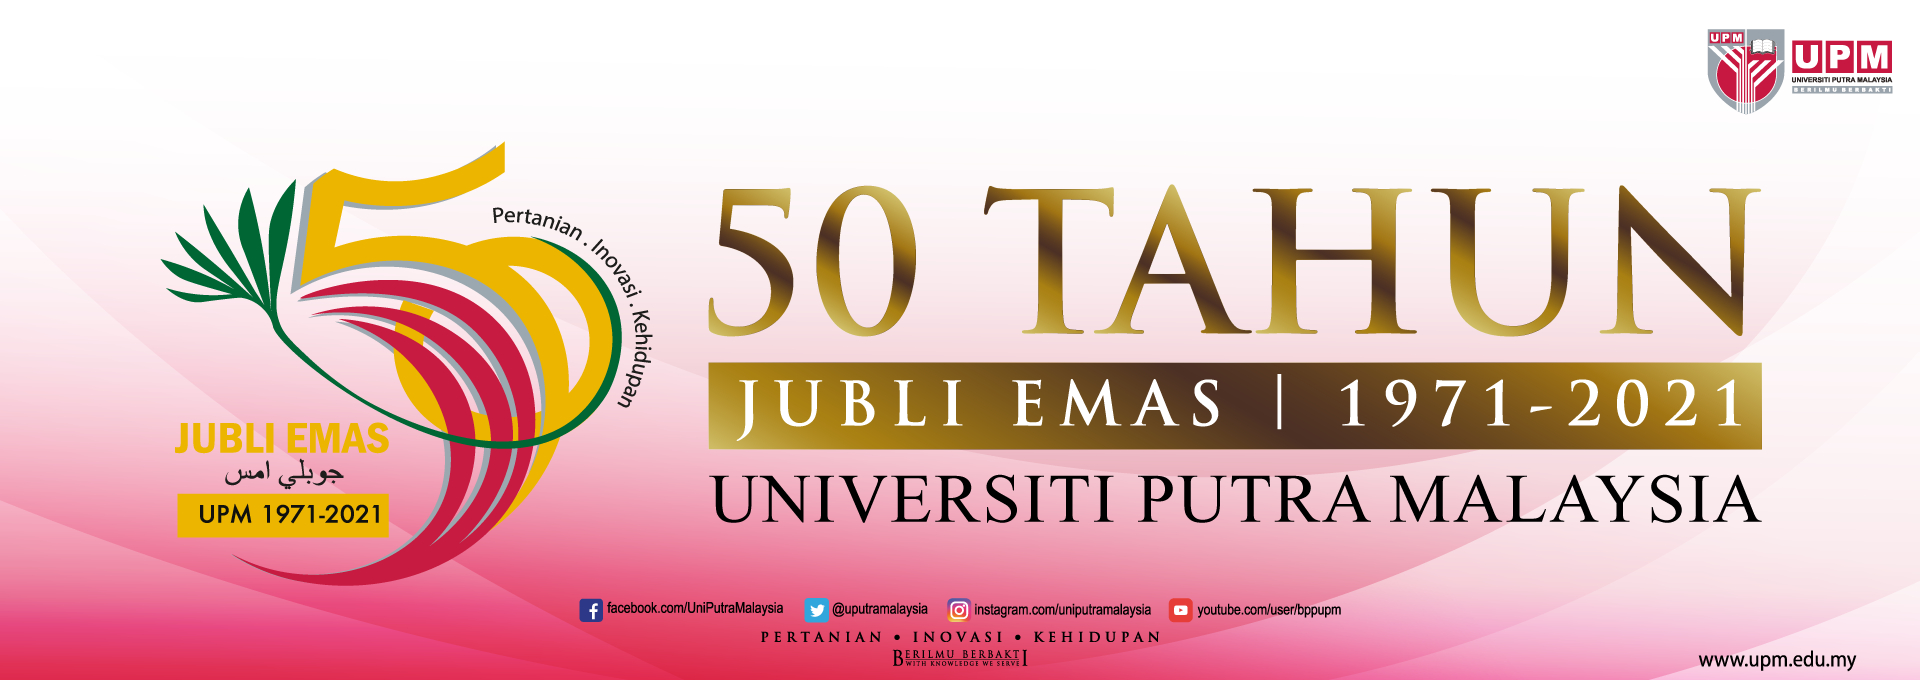 UPM 50 Years  Golden Jubilee Celebrations